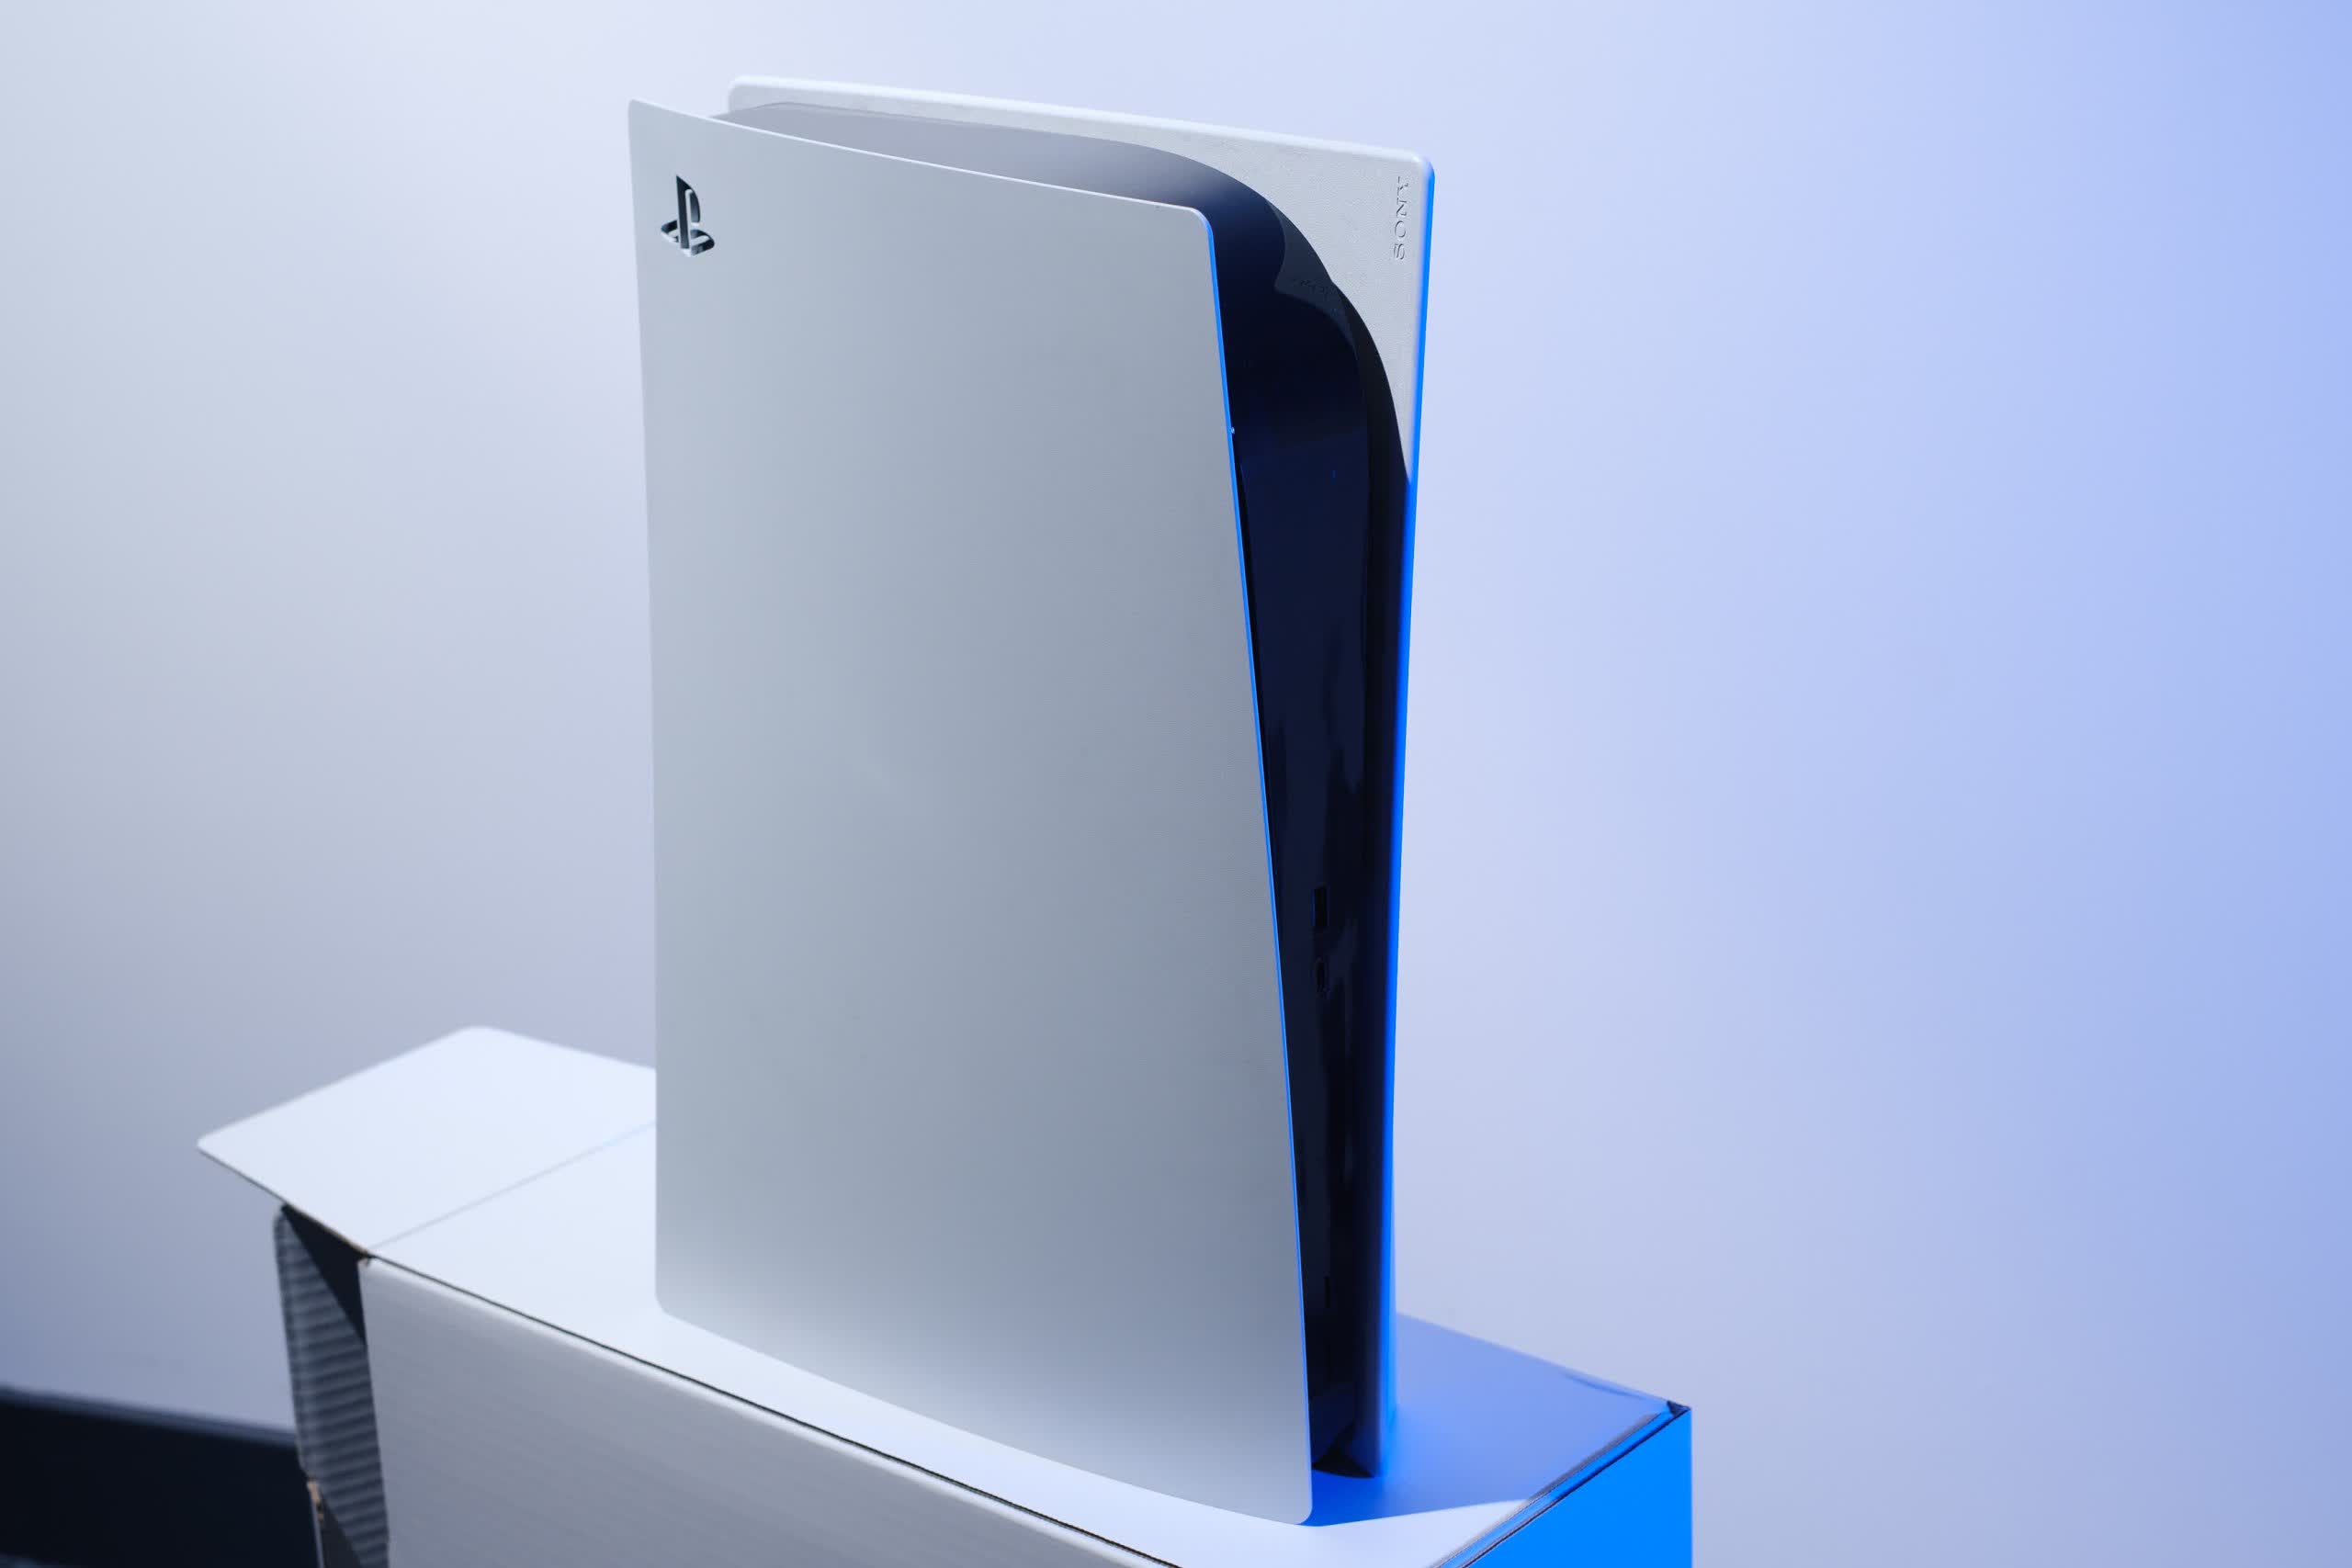 Alleged PlayStation 5 Slim case leaks, is a platform refresh incoming?